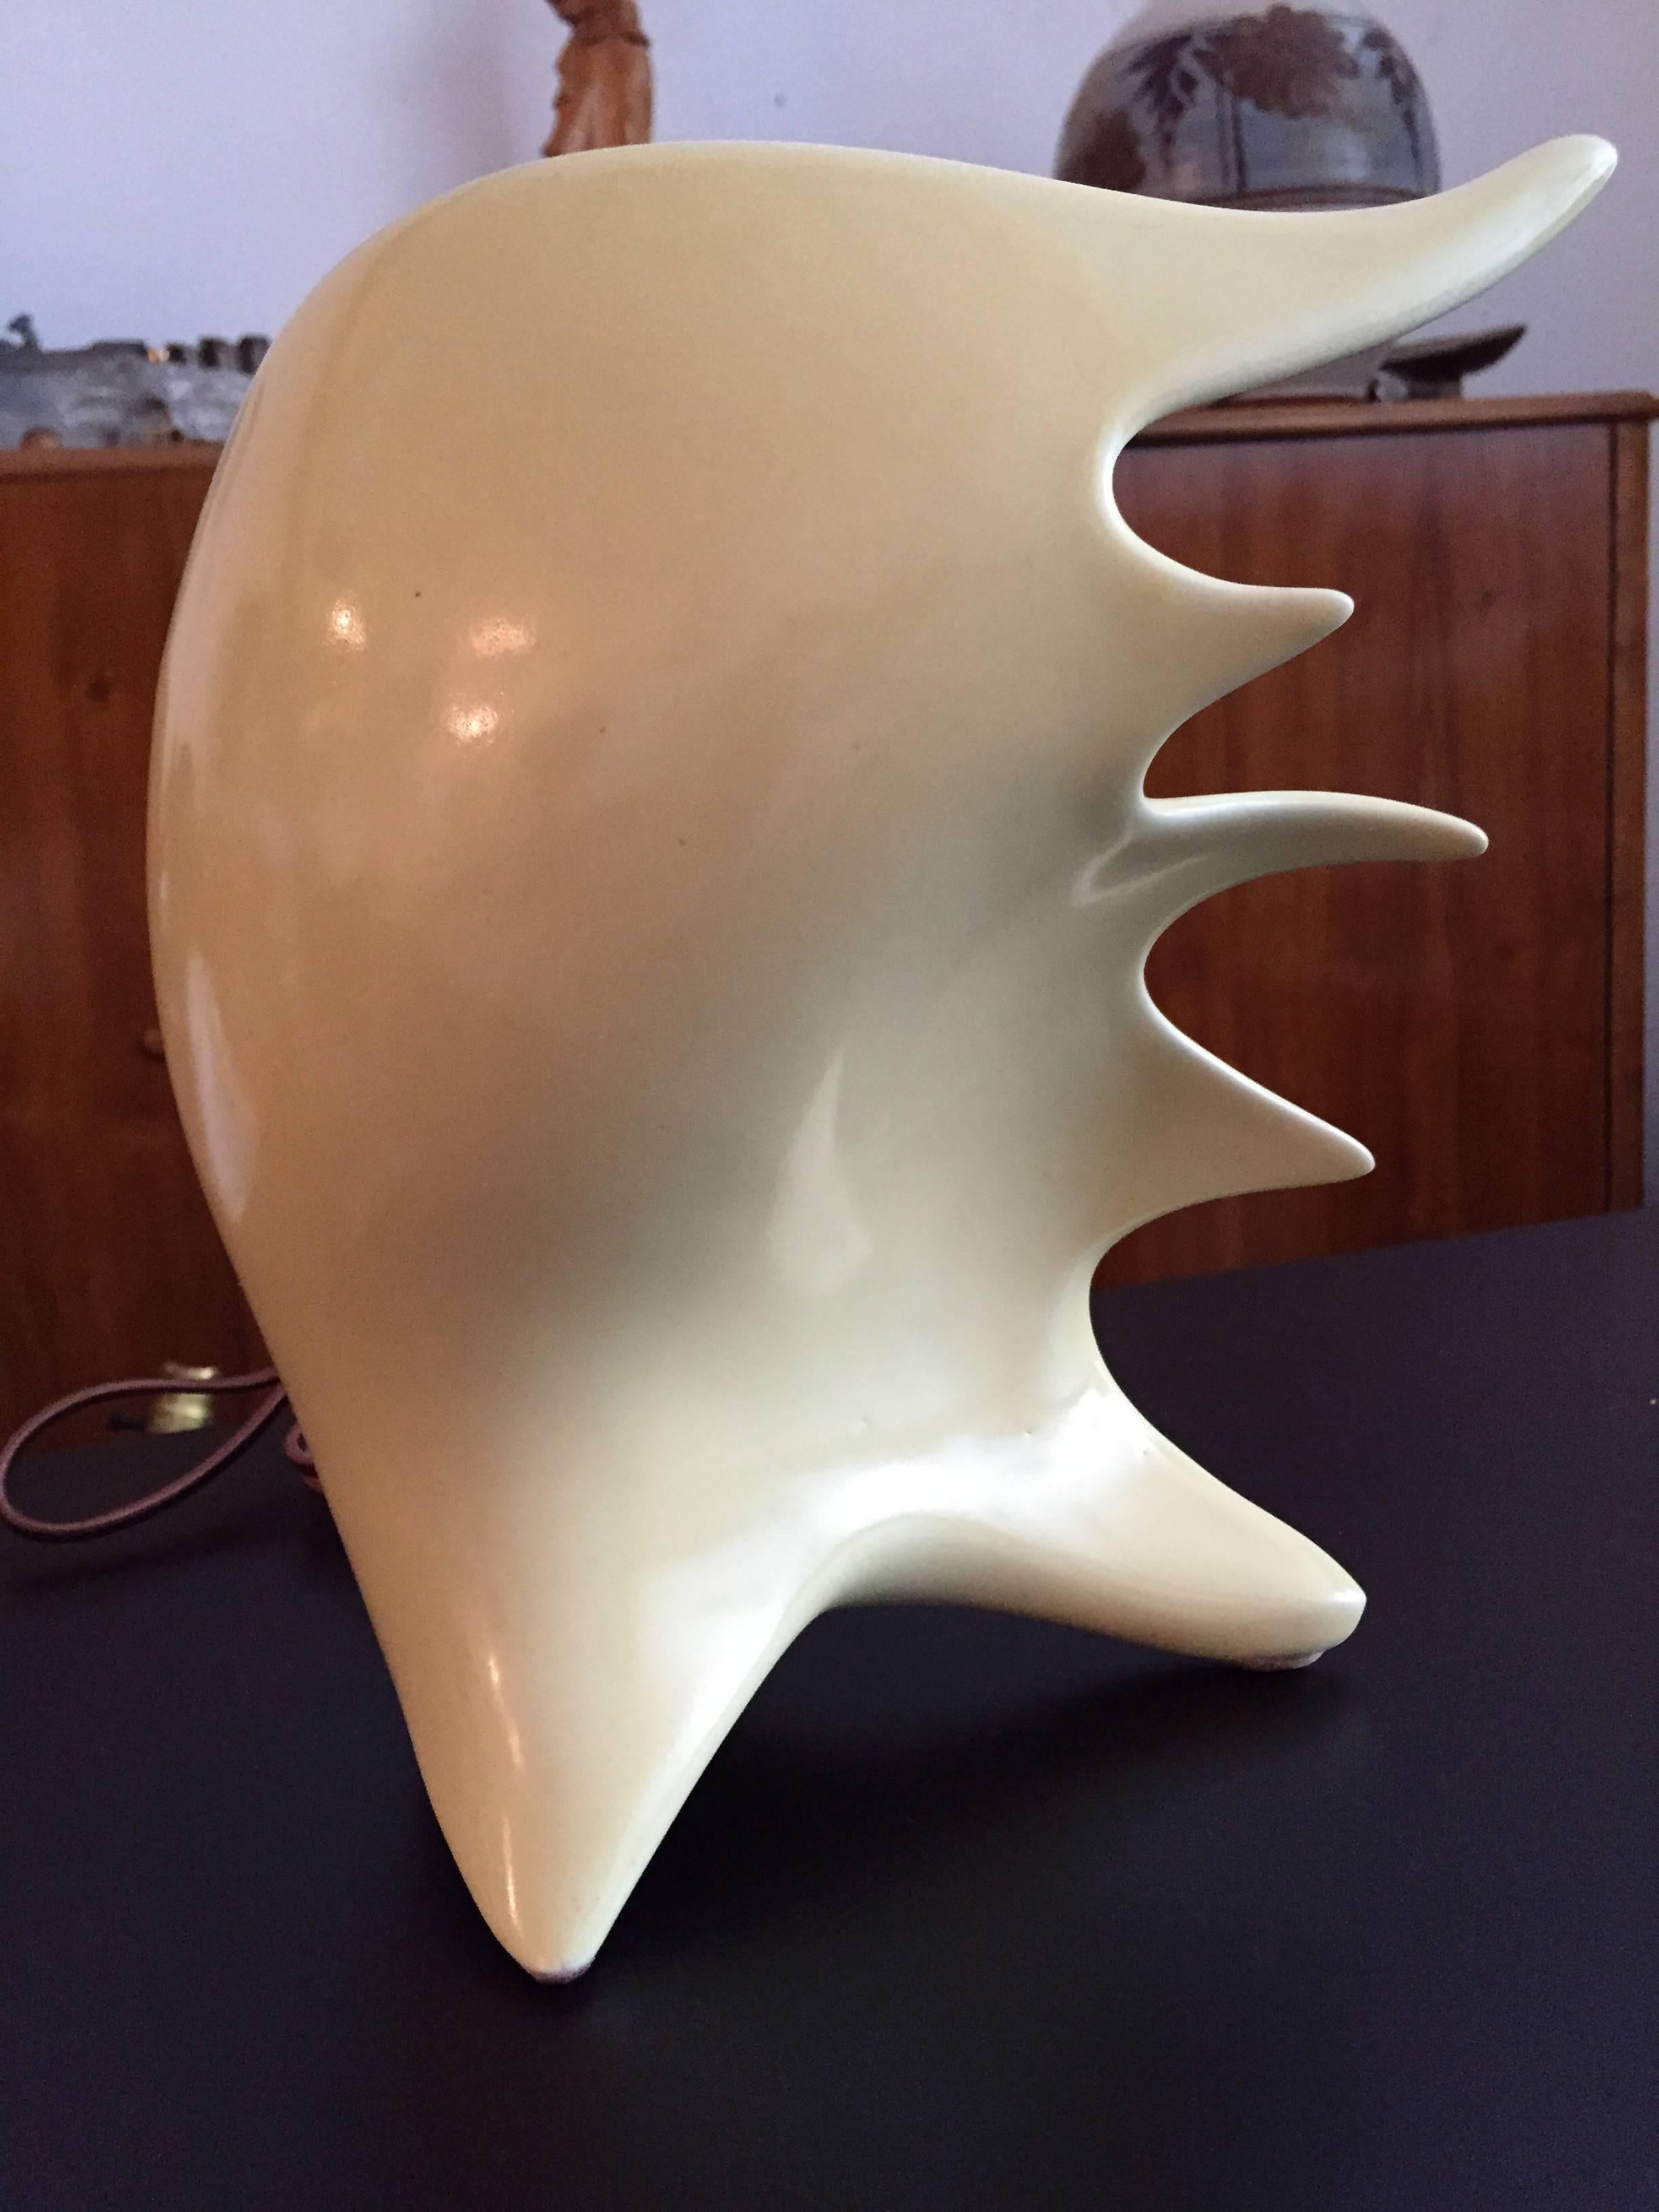 Original Conchiglia-Keramiklampe aus den 1950er Jahren in Form einer Muschelschale.

Societa Ceramica Italiana di Laveno. Unterschrieben.